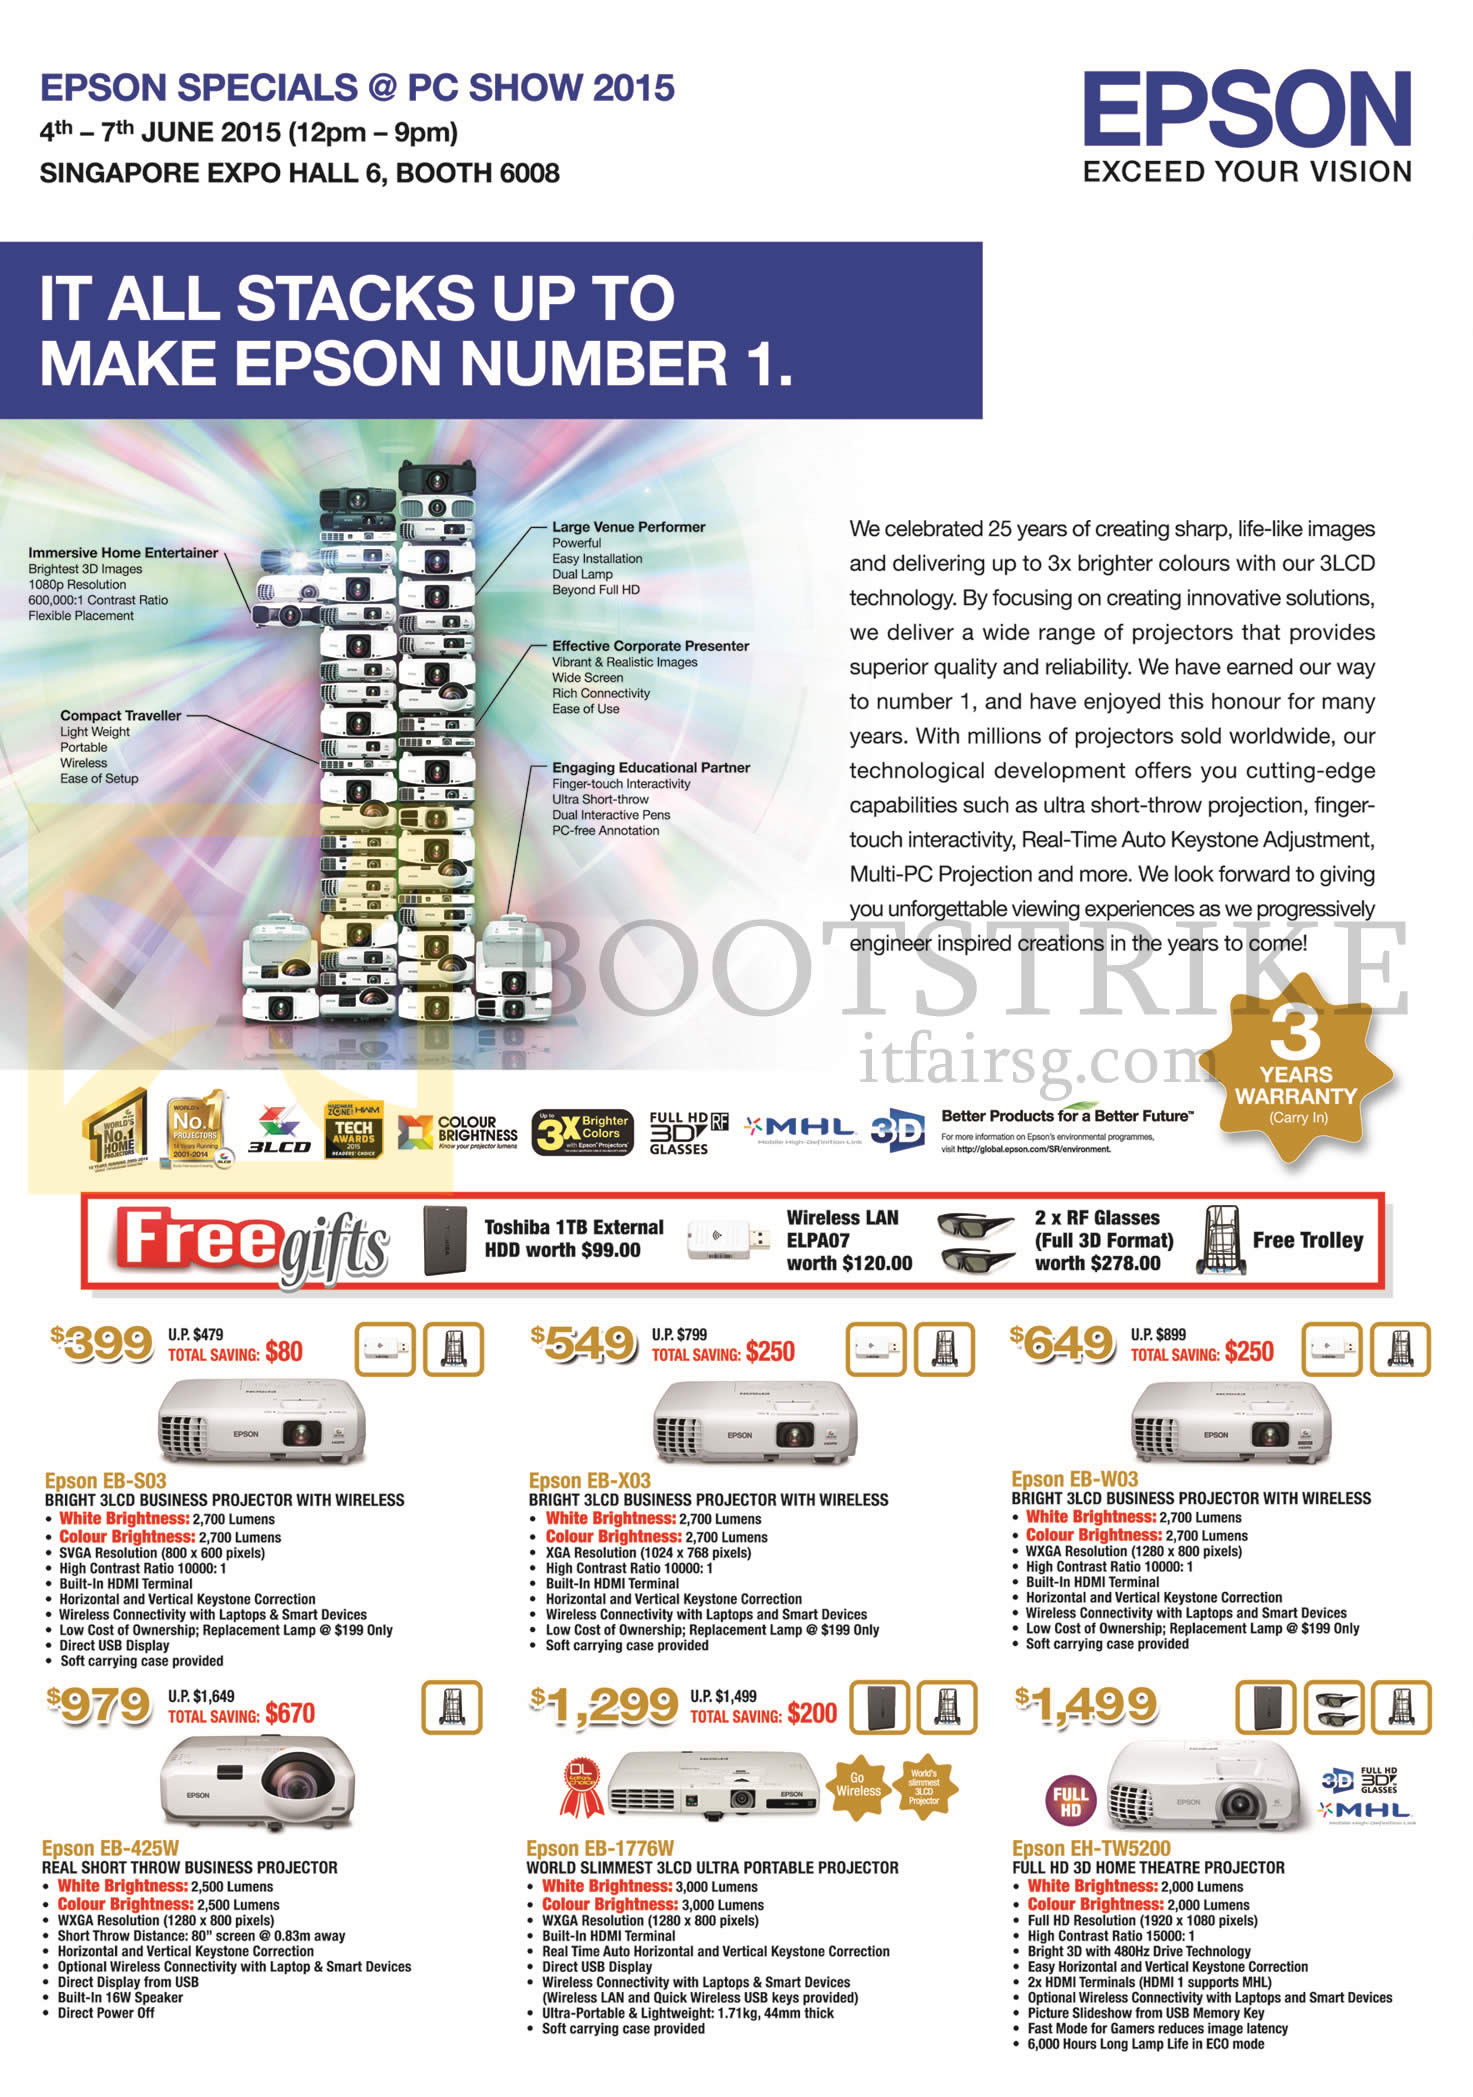 PC SHOW 2015 price list image brochure of Epson Projectors EB-S03, EB-X03, EB-W03, EB-425W, EB-1776W, EH-TW5200